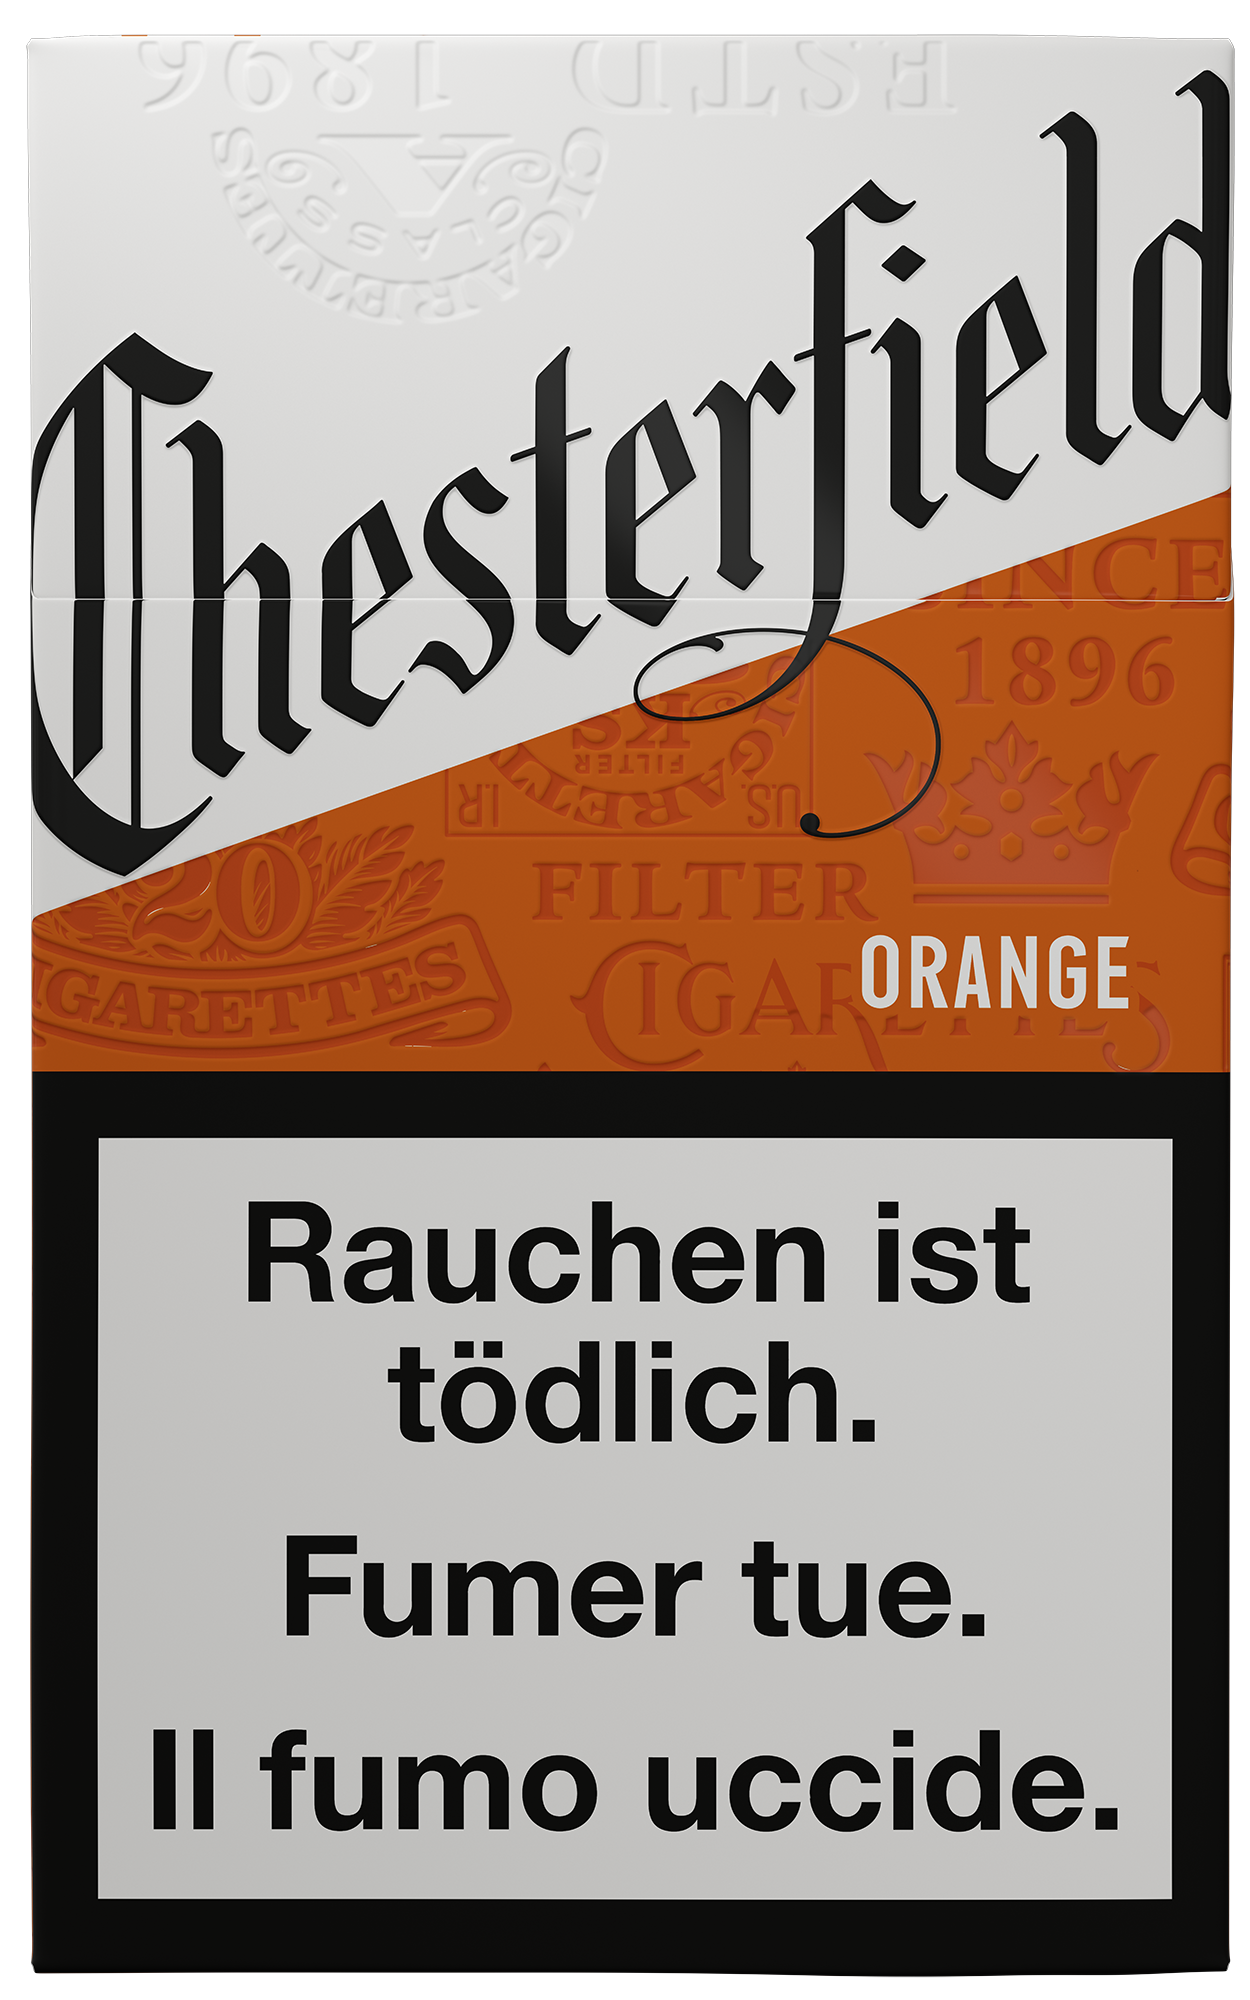 Chesterfield Orange Box